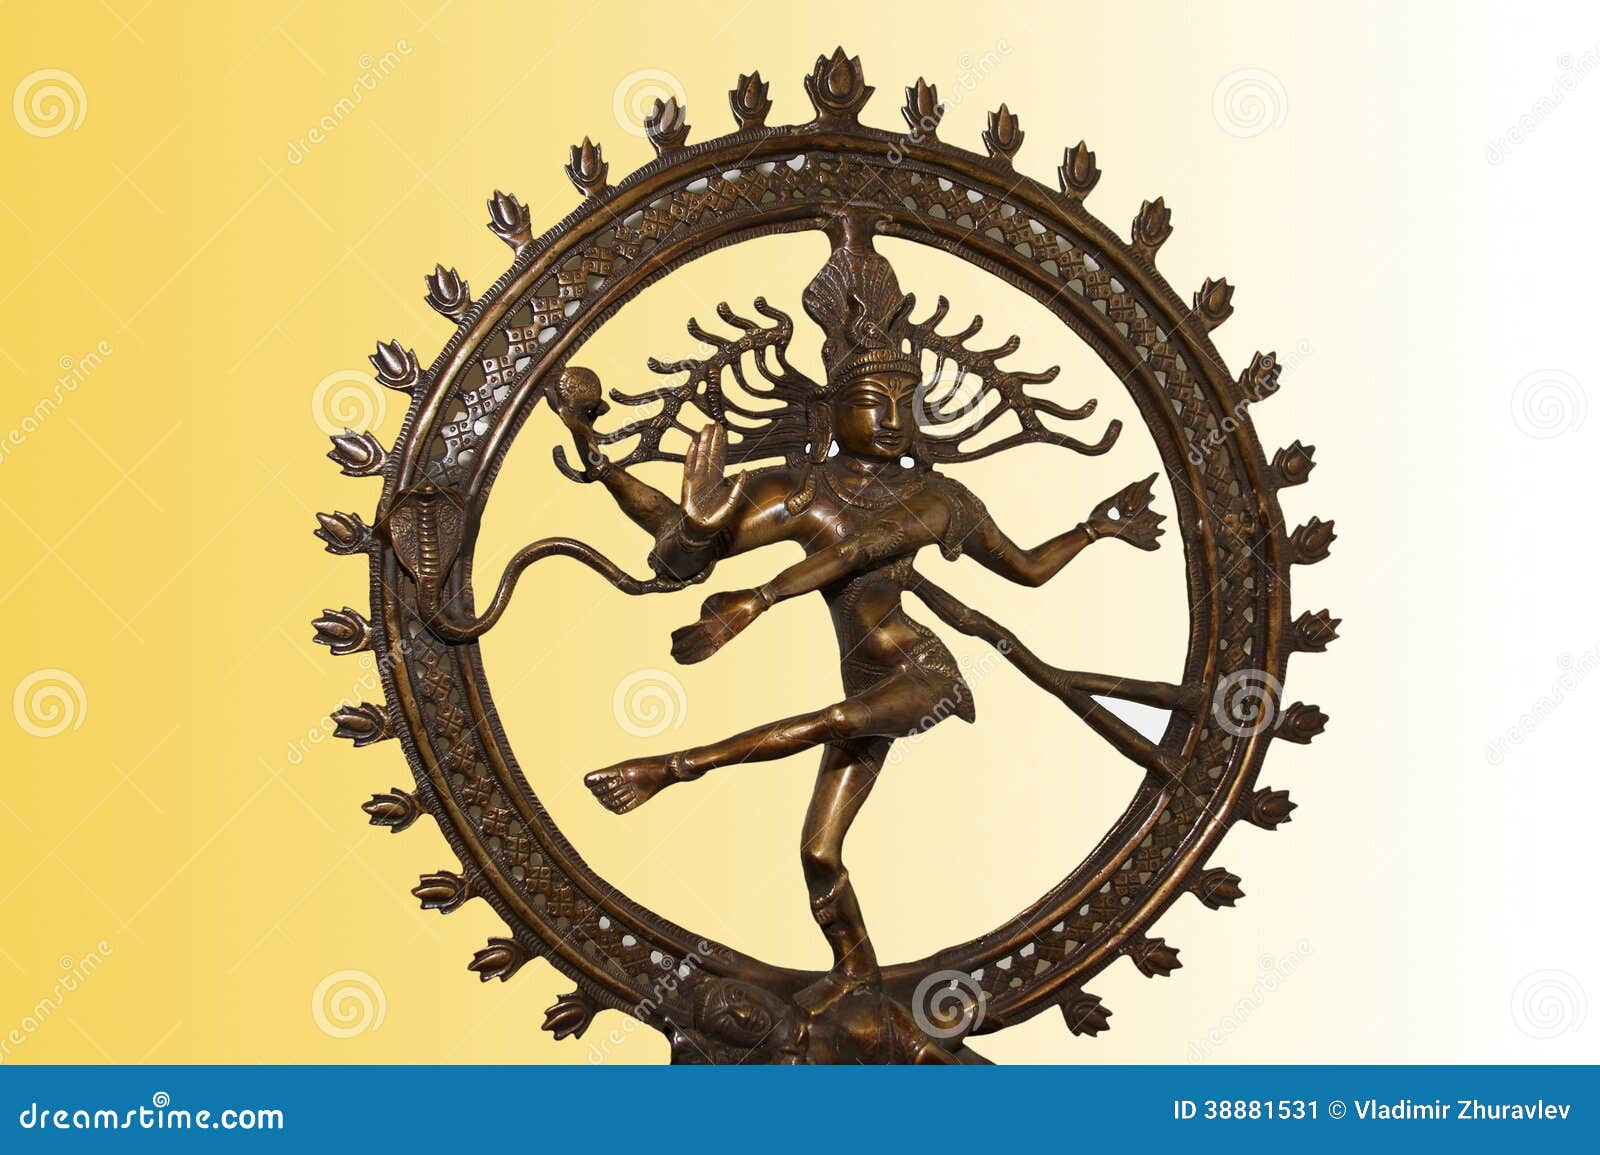 Indian Hindu God Shiva Nataraja - Lord of Dance Statue Stock Image ...